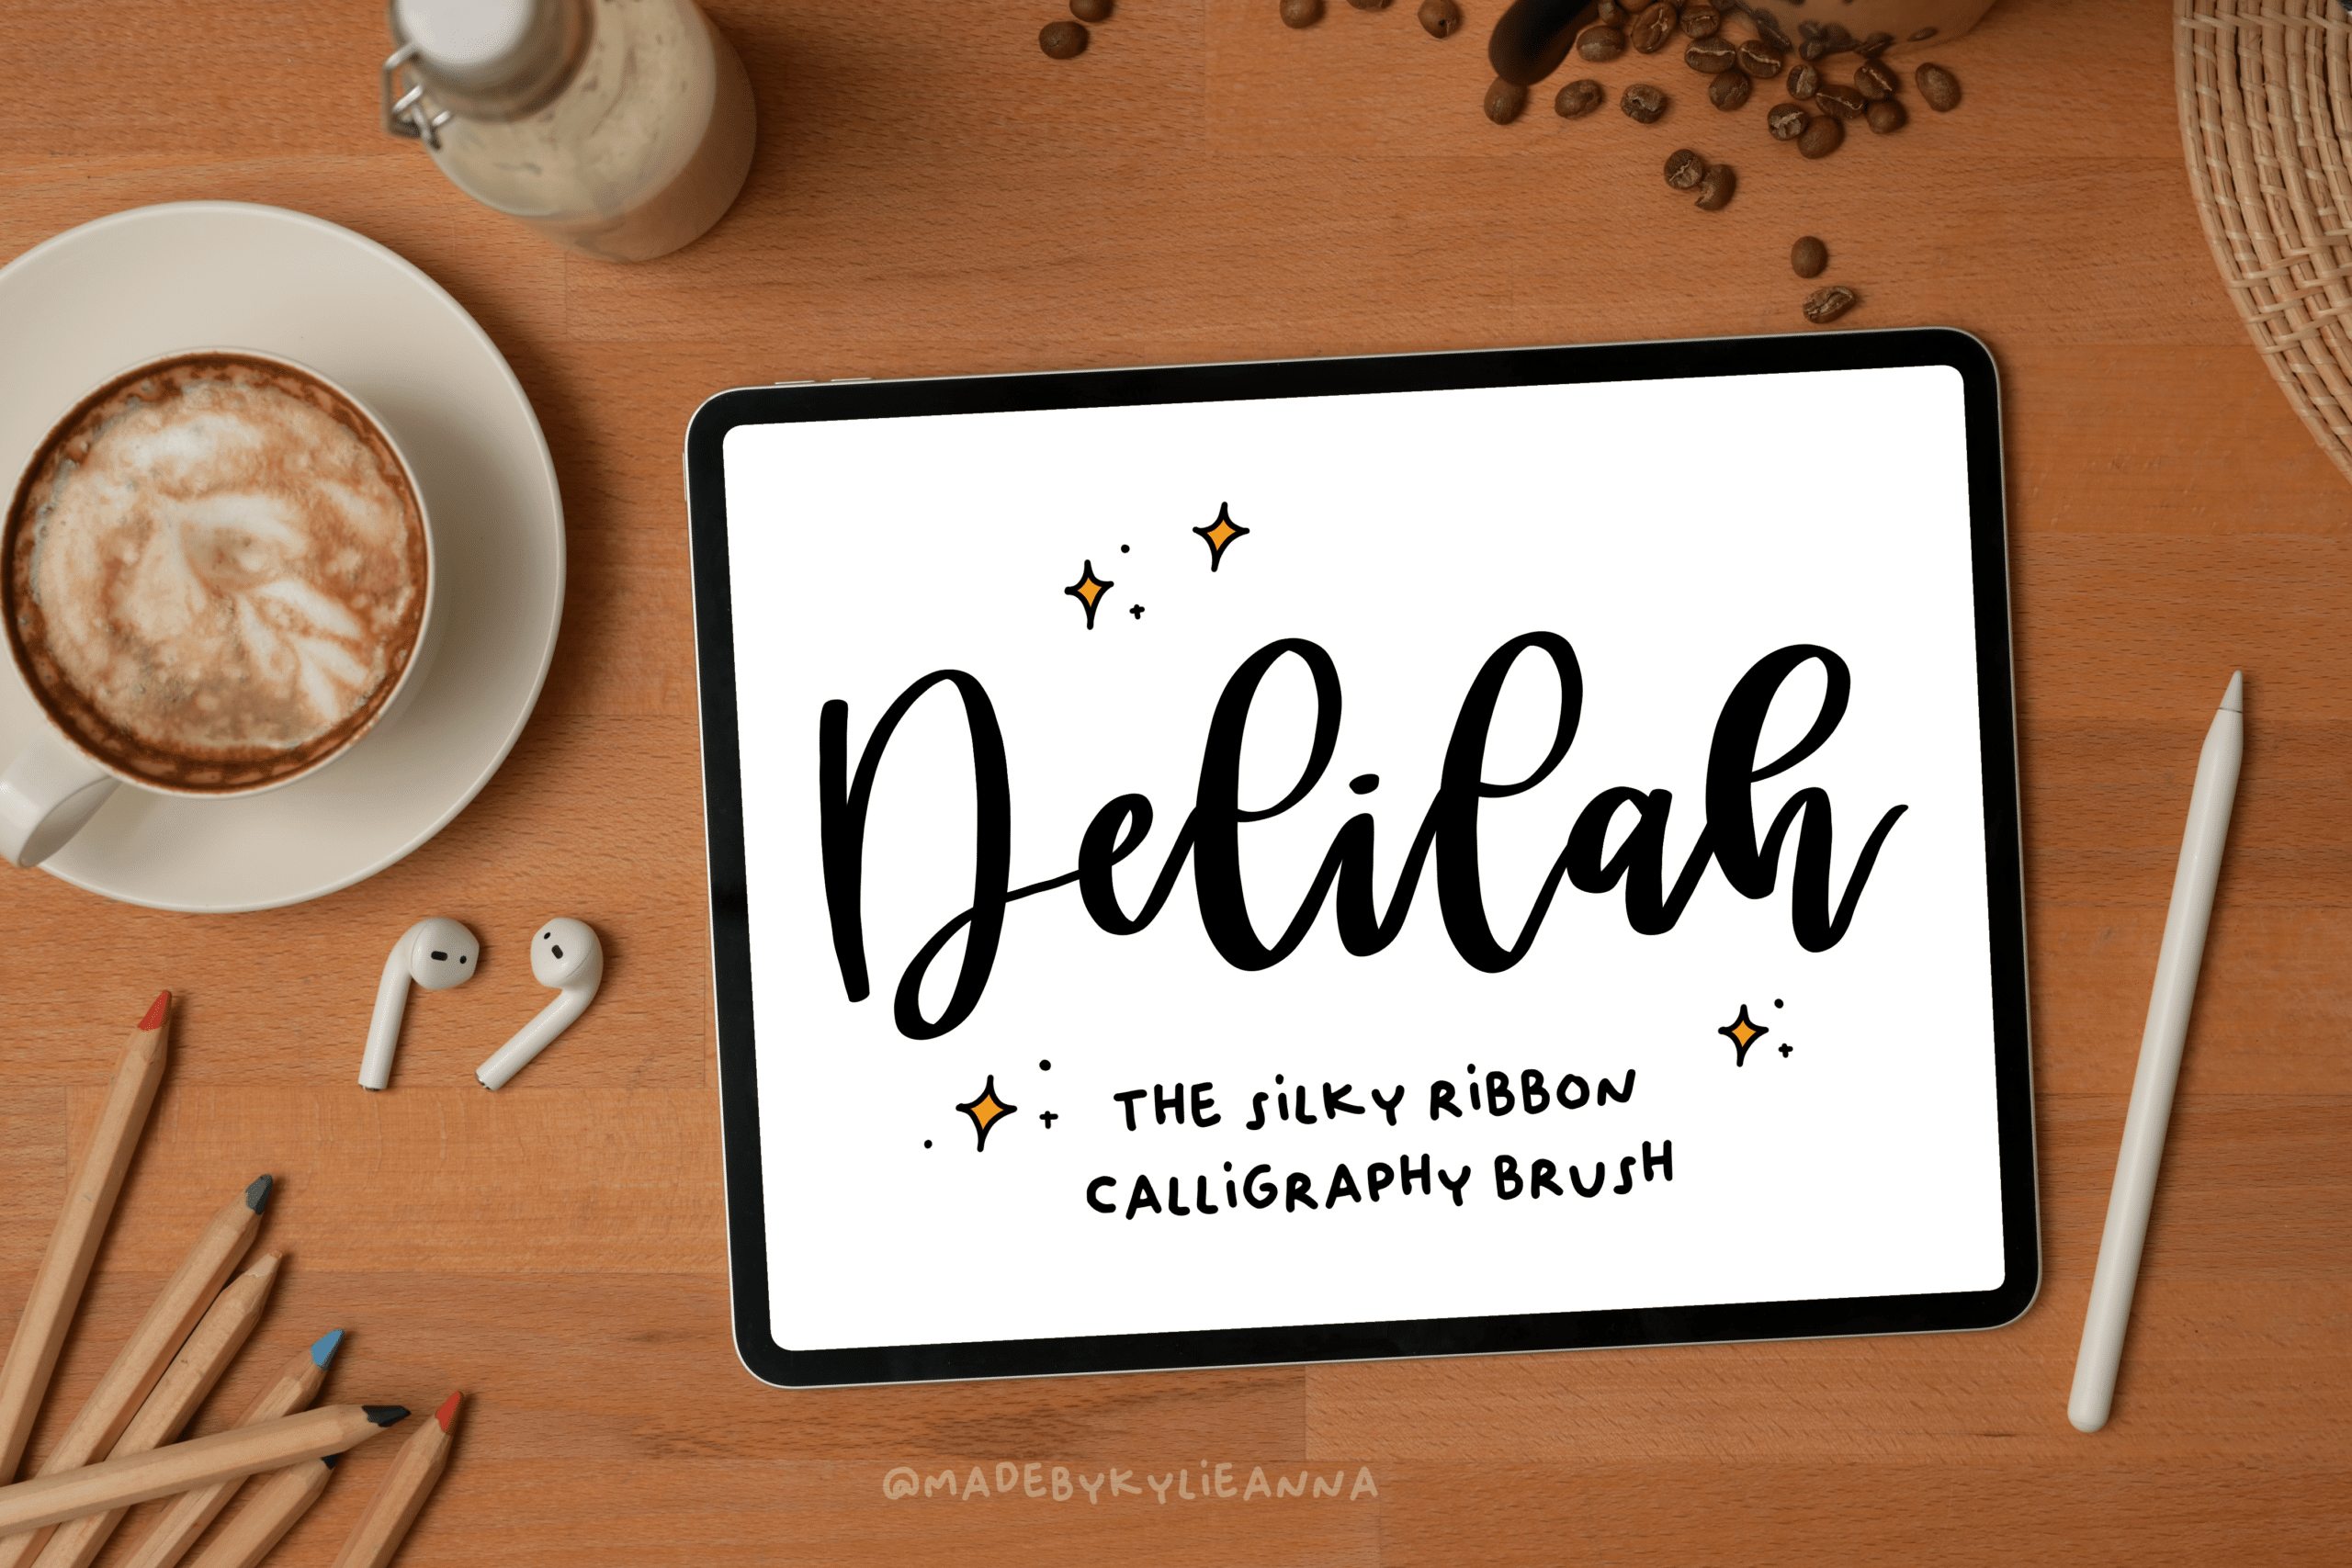 ‘Delilah’ Calligraphy Brush for Procreate